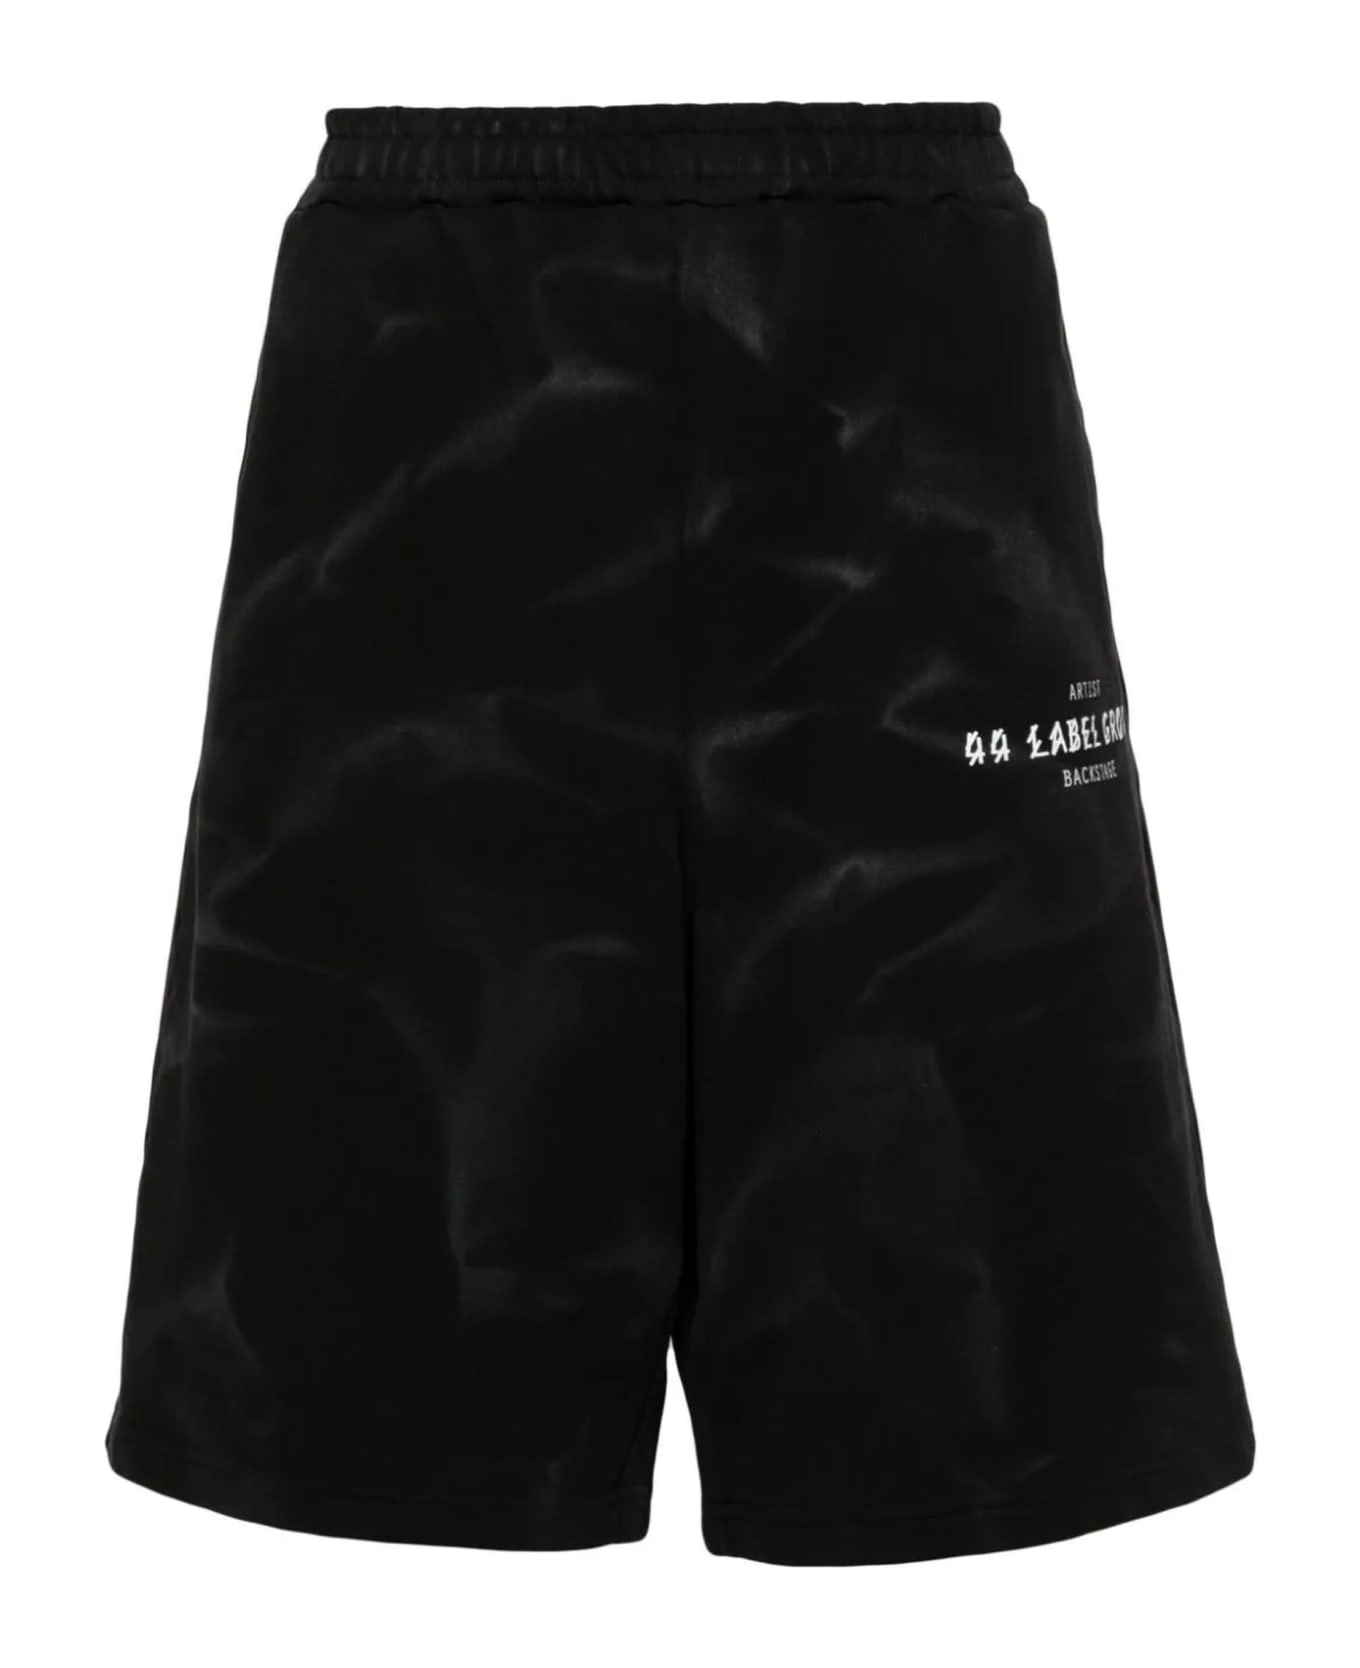 44 Label Group Shorts Black - Black